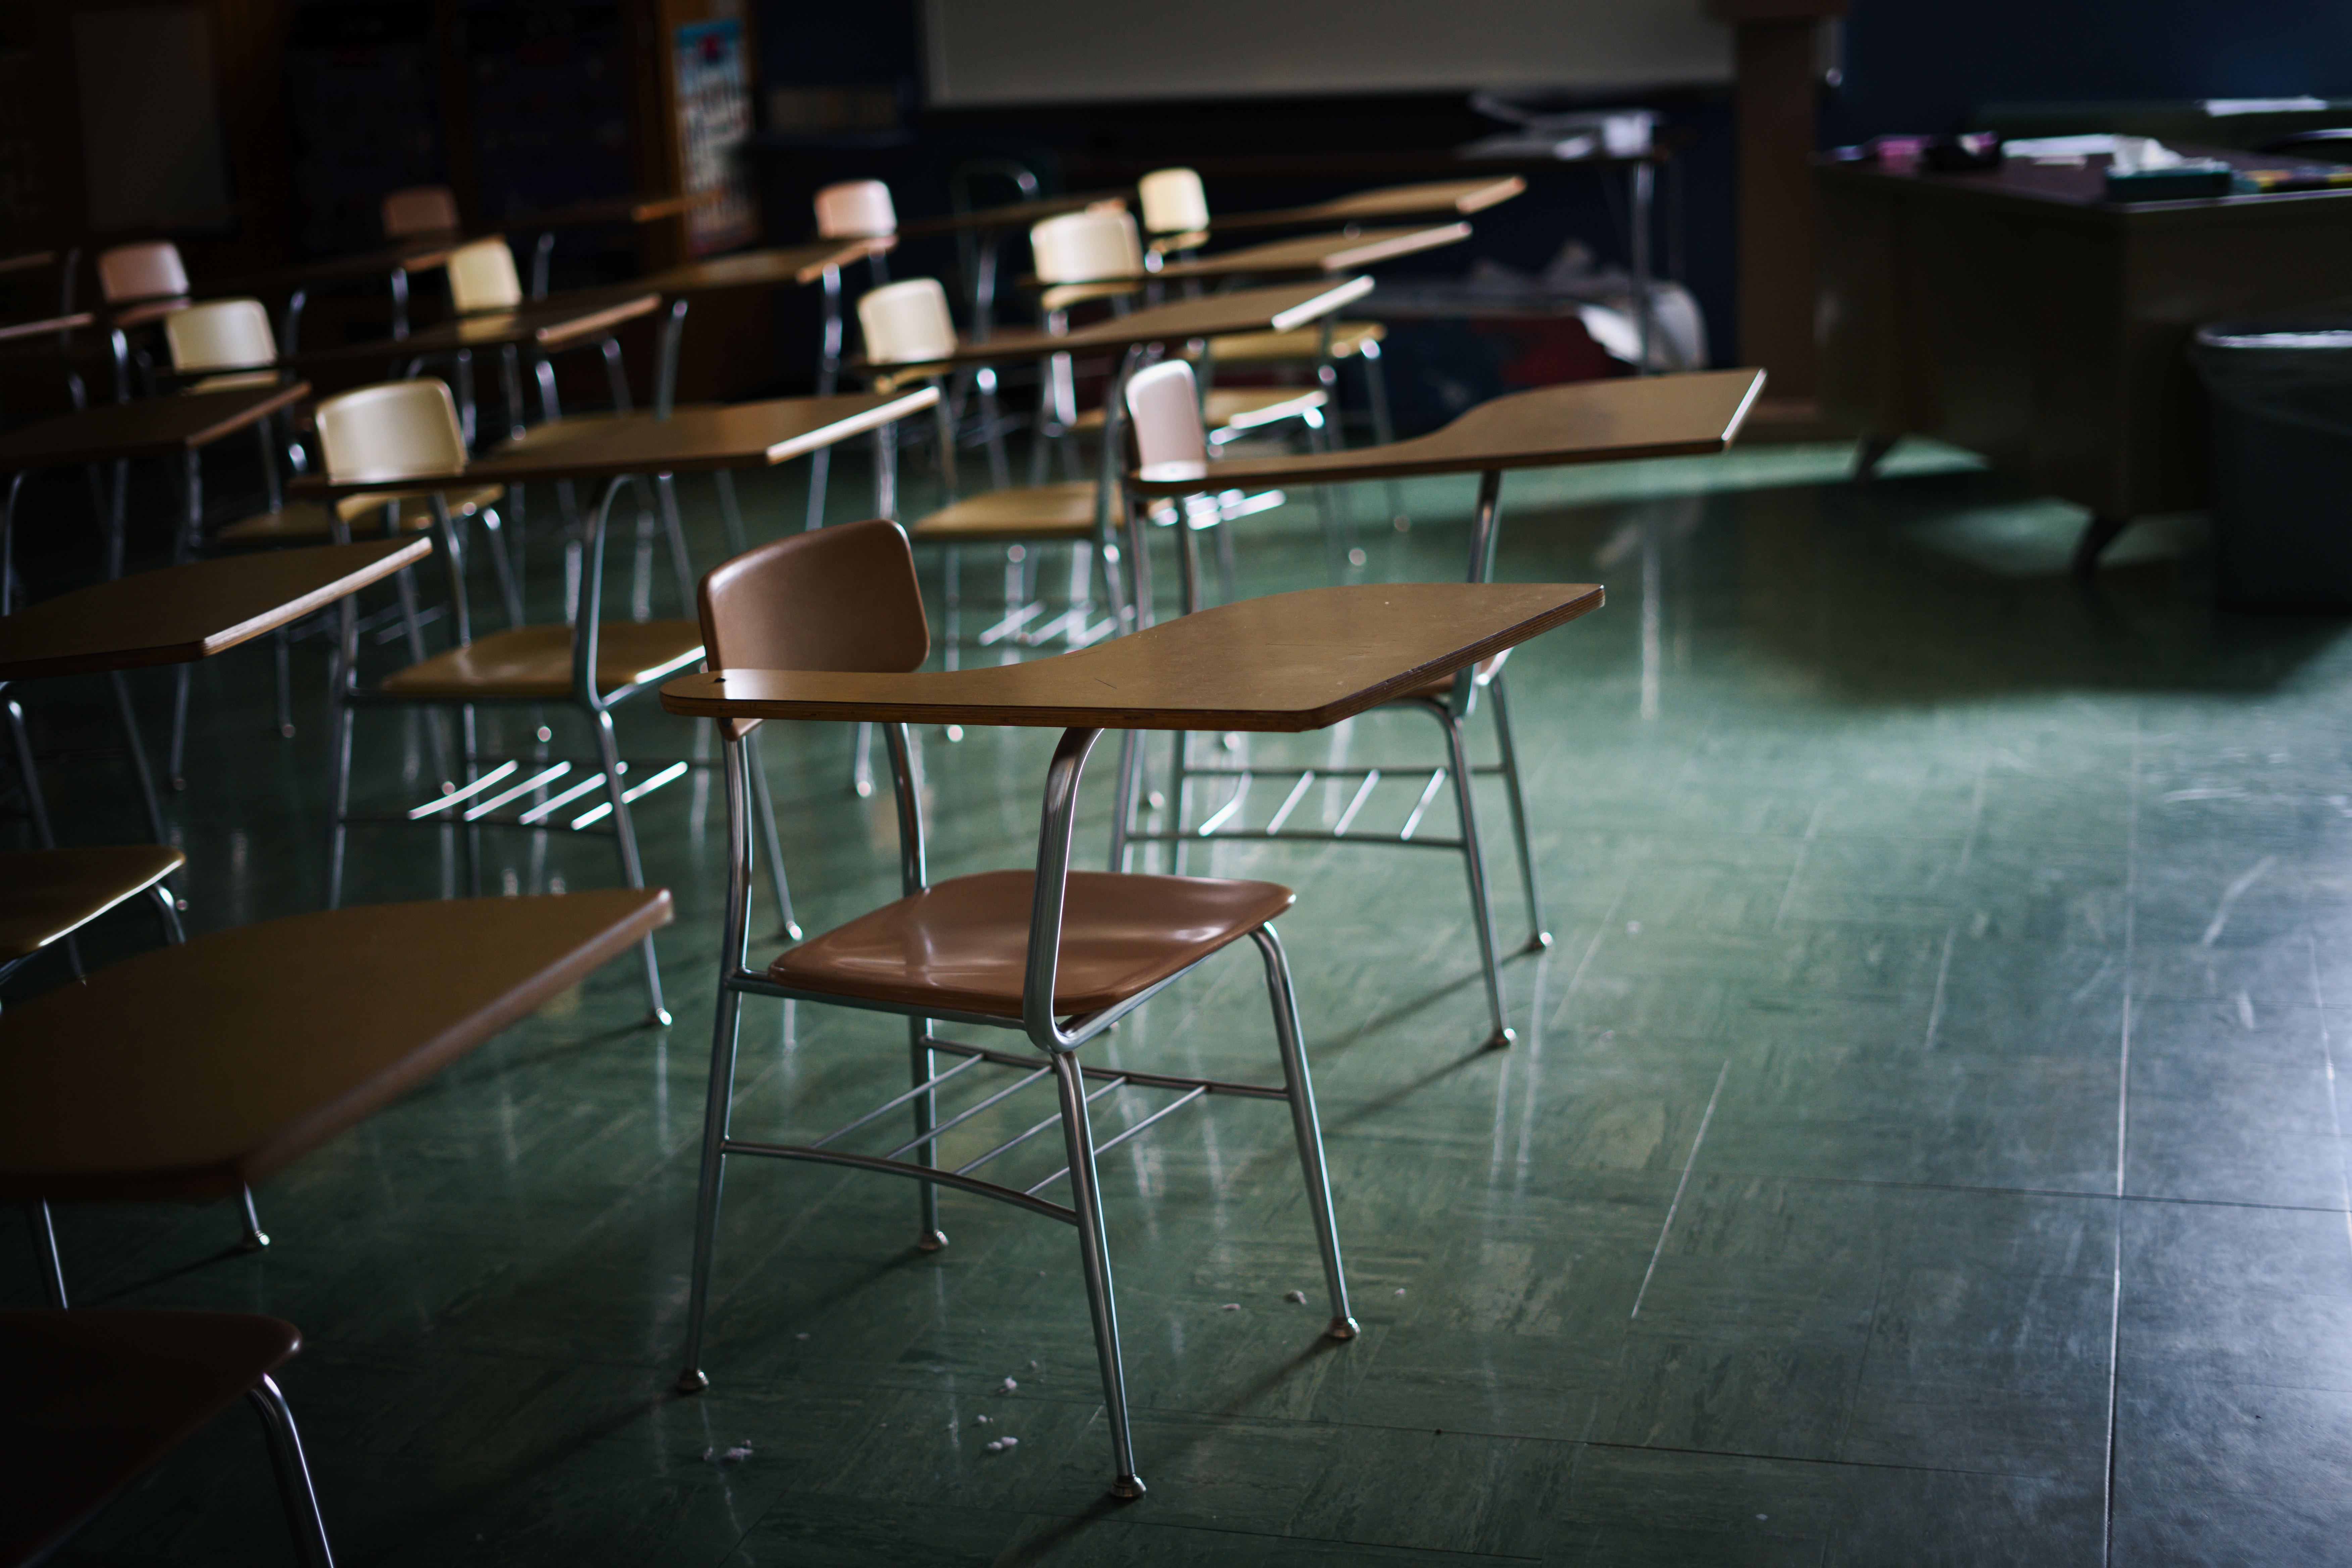 Une salle de classe sombre et vide | Source : Shutterstock